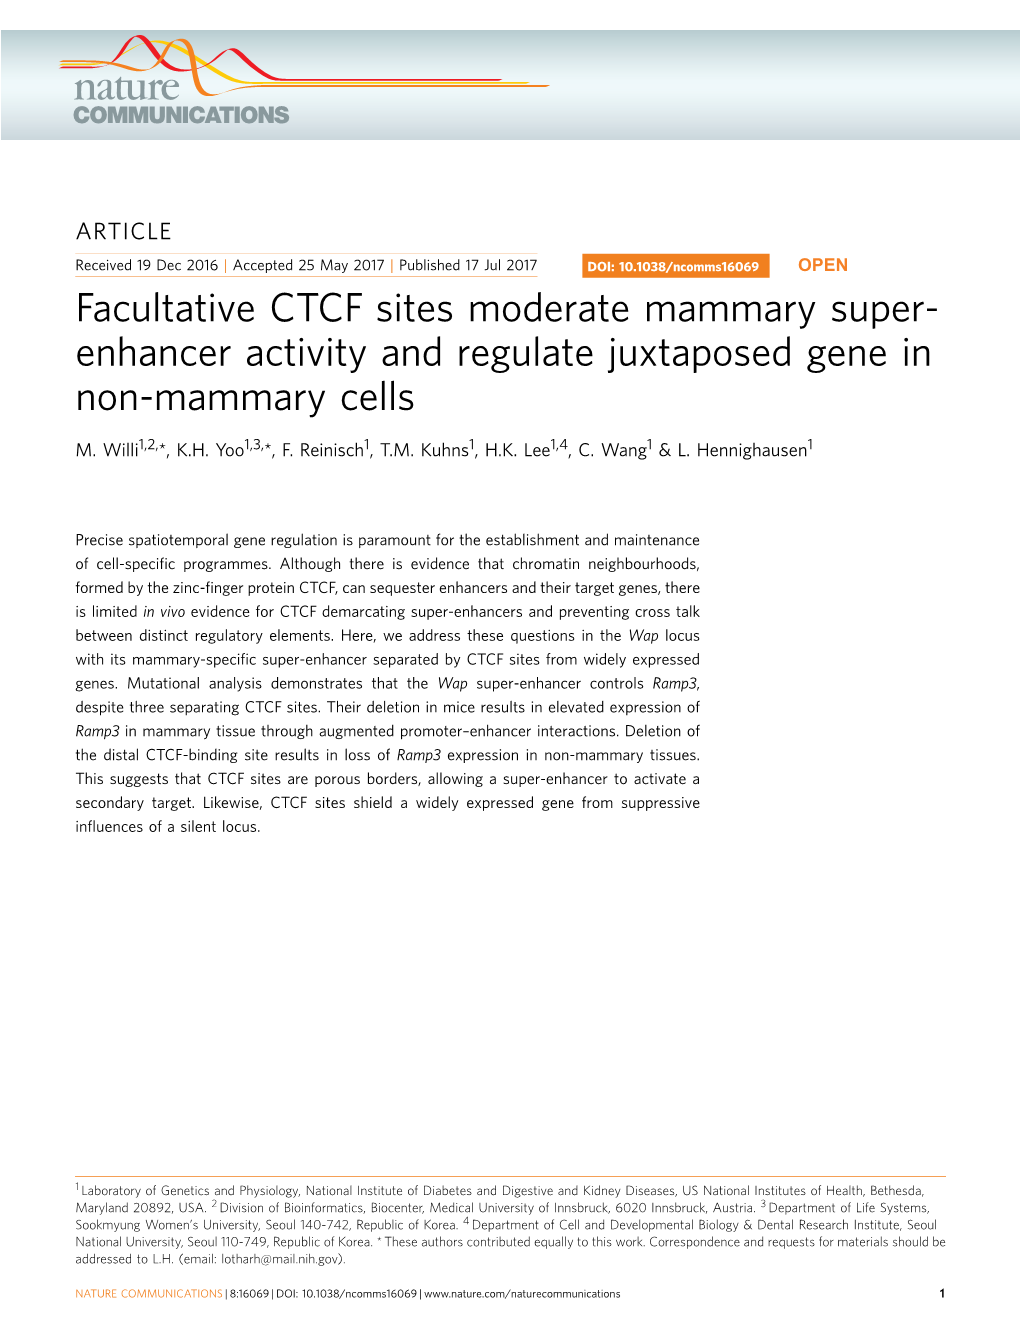 Facultative CTCF Sites Moderate Mammary Super-Enhancer Activity